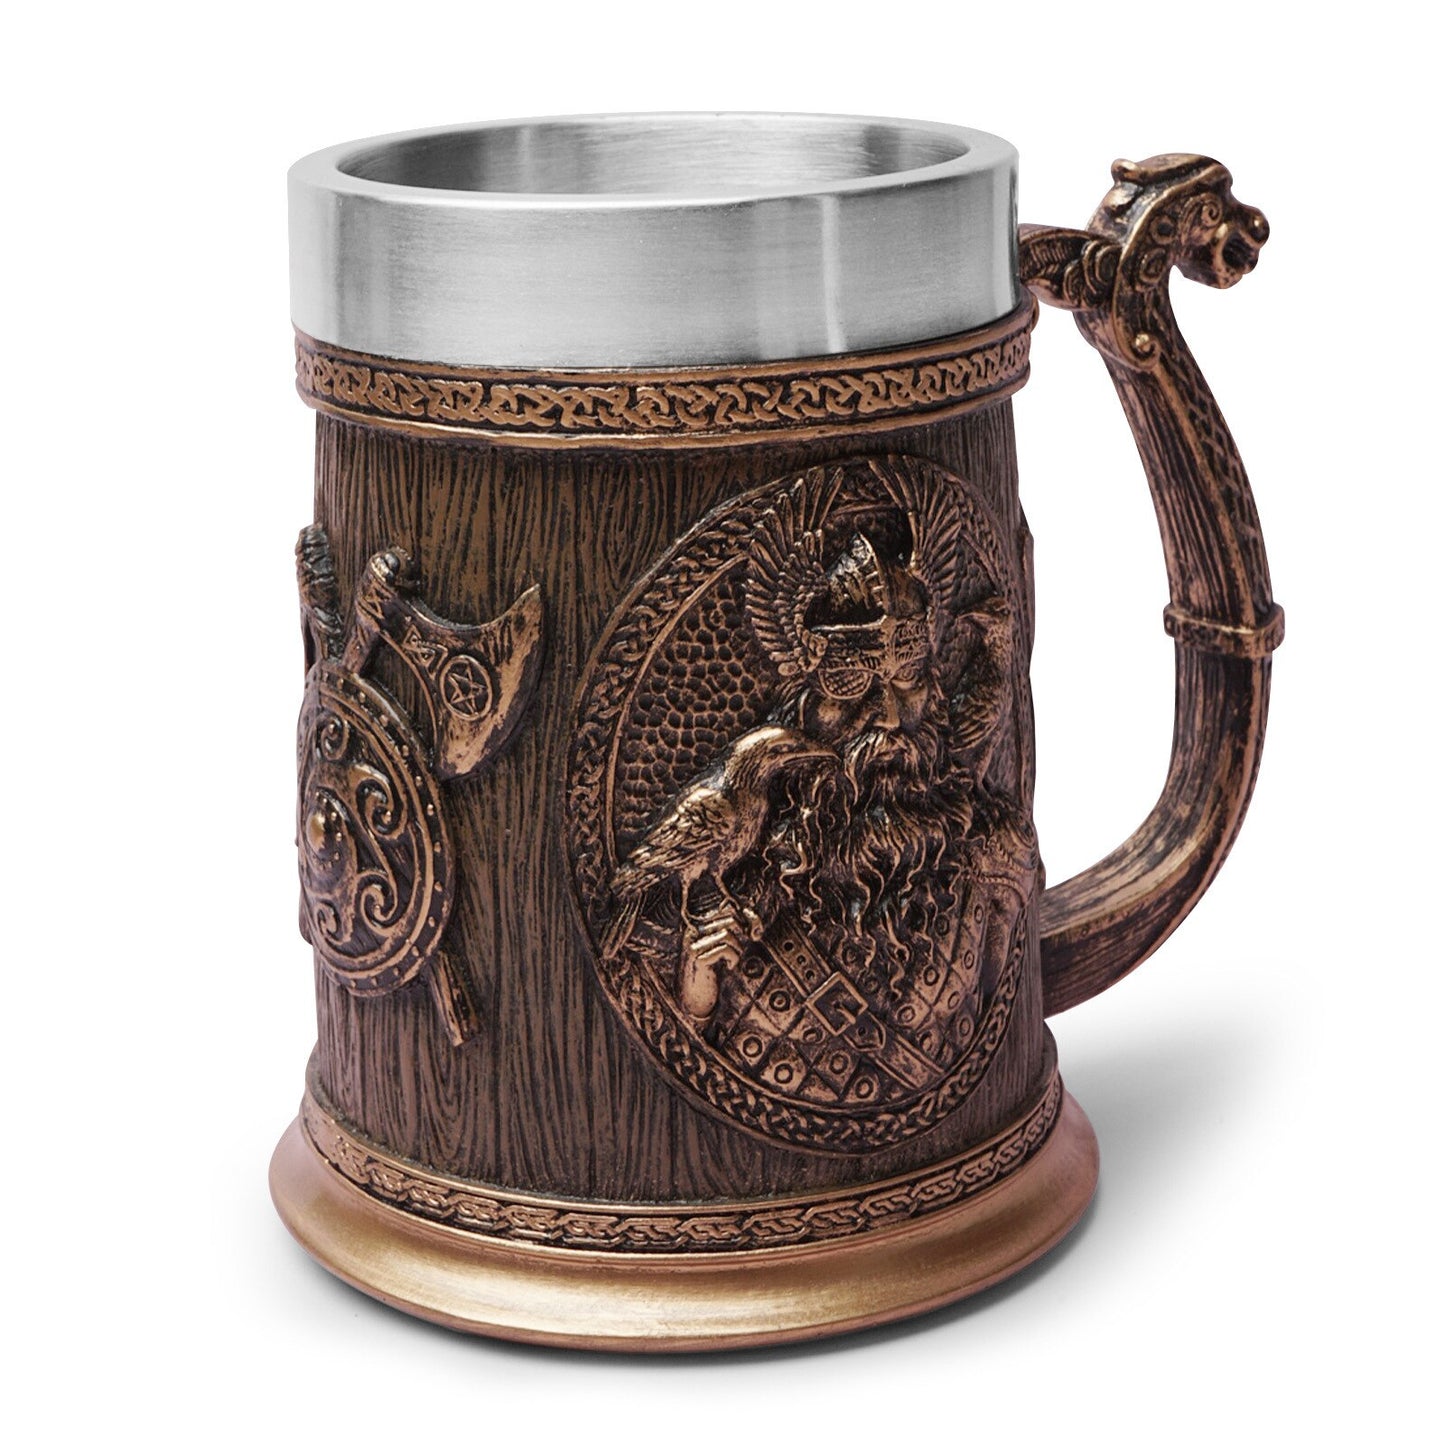 Odin’s heritage medieval mug